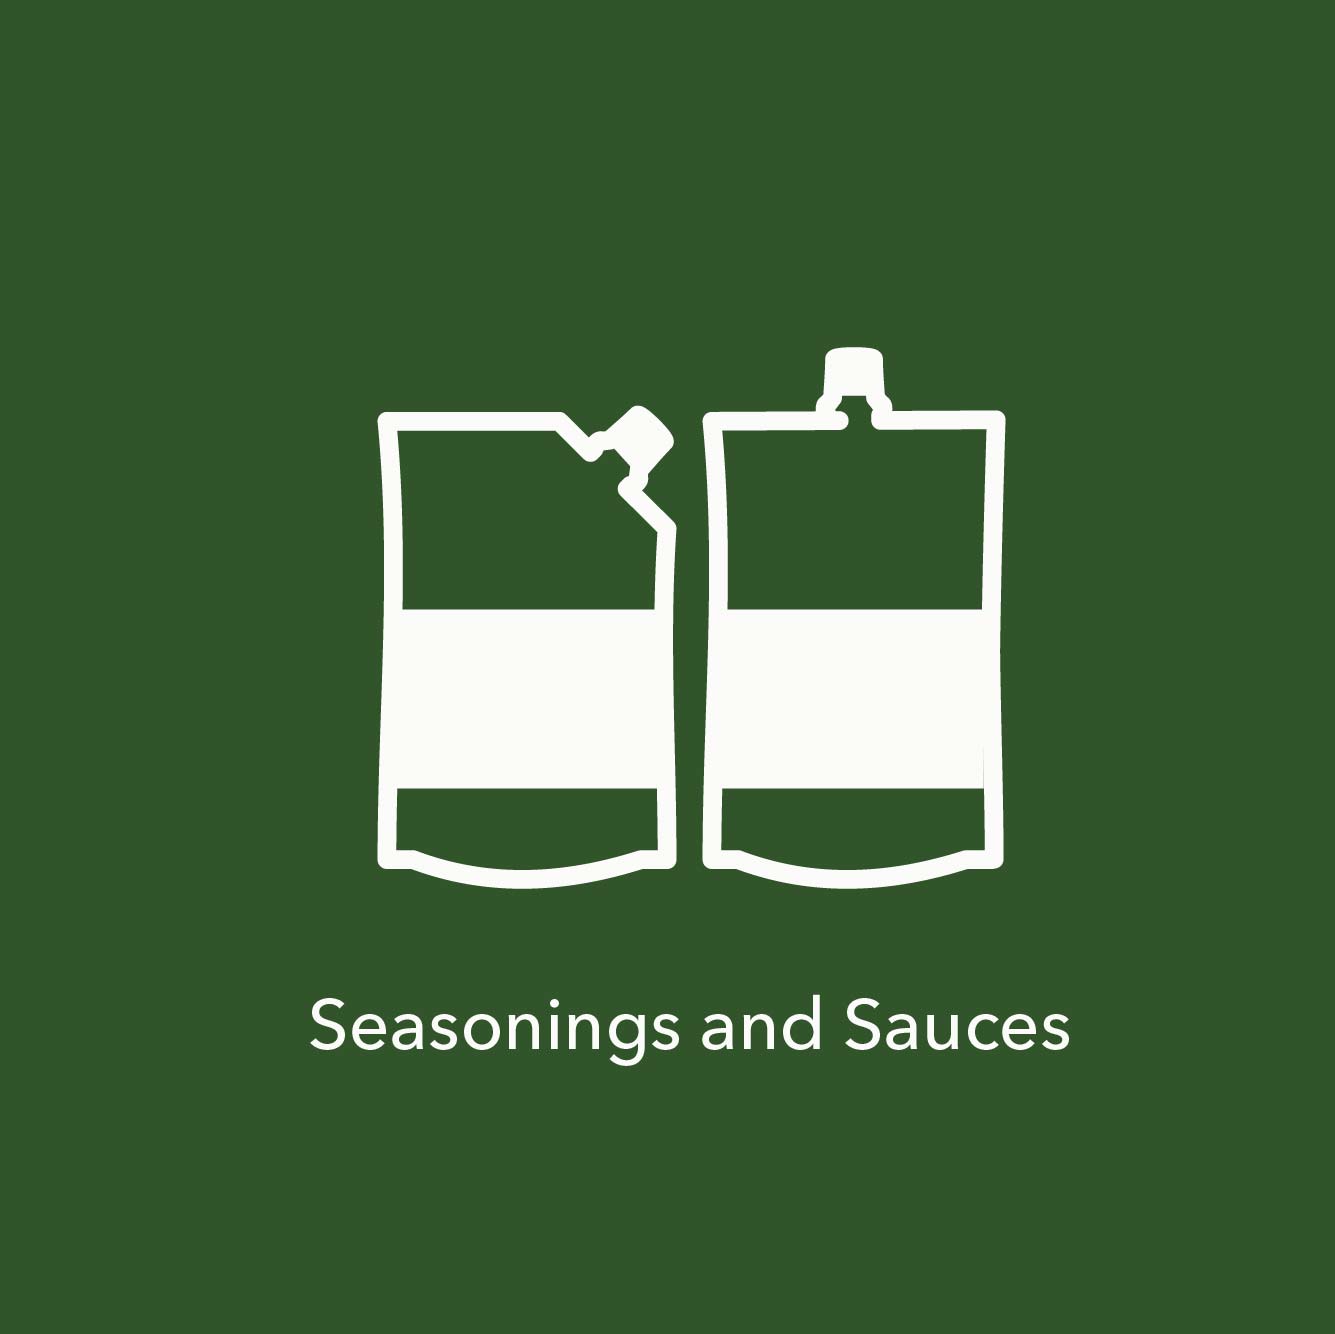 06.Seasonings and Sauces